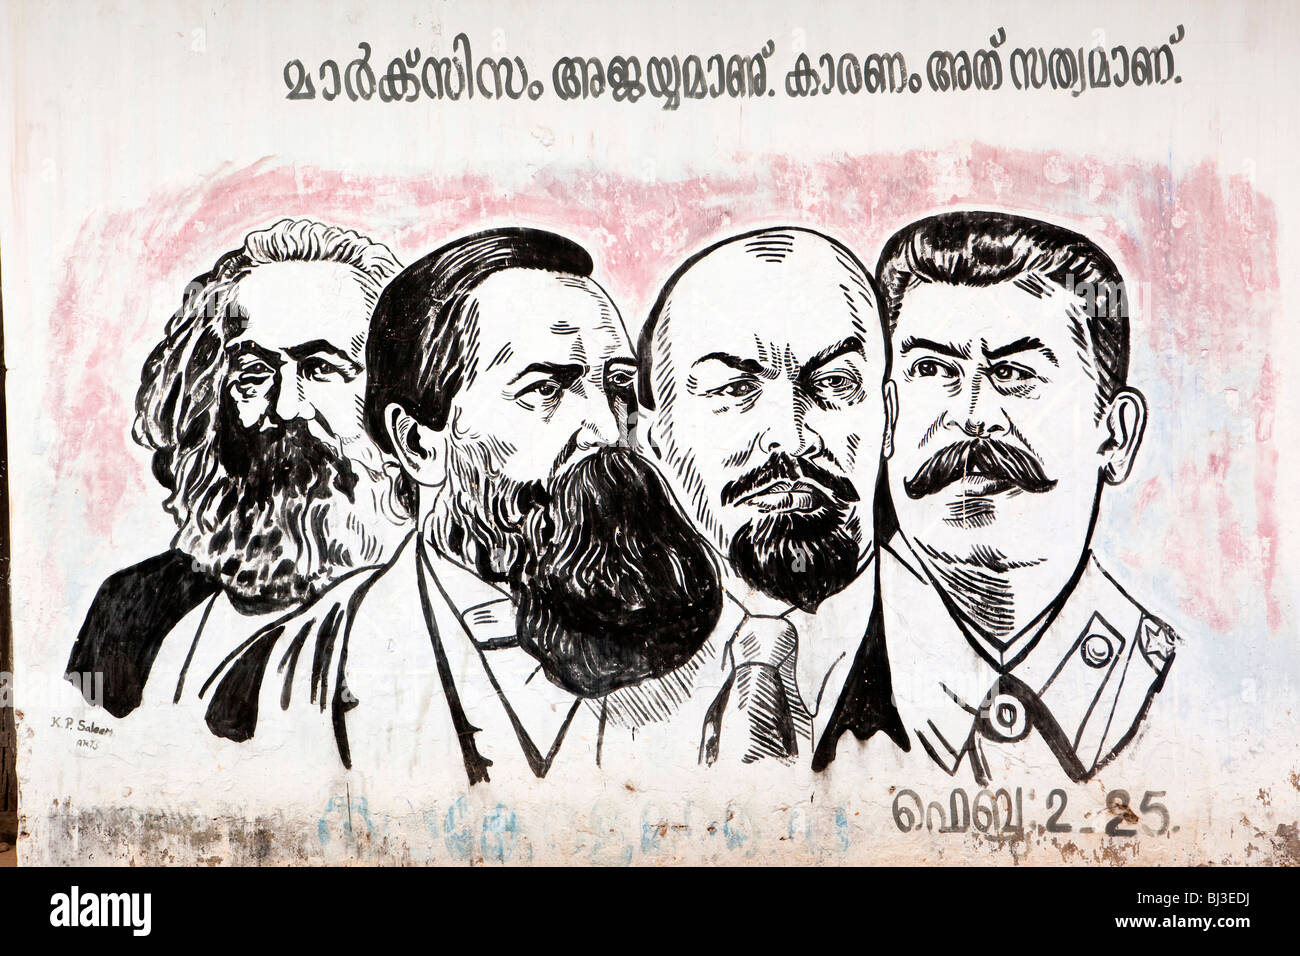 India, Kerala, Calicut, Kozhikode, Halwa Bazaar, politics, Marxist communist figures painted on house wall Stock Photo